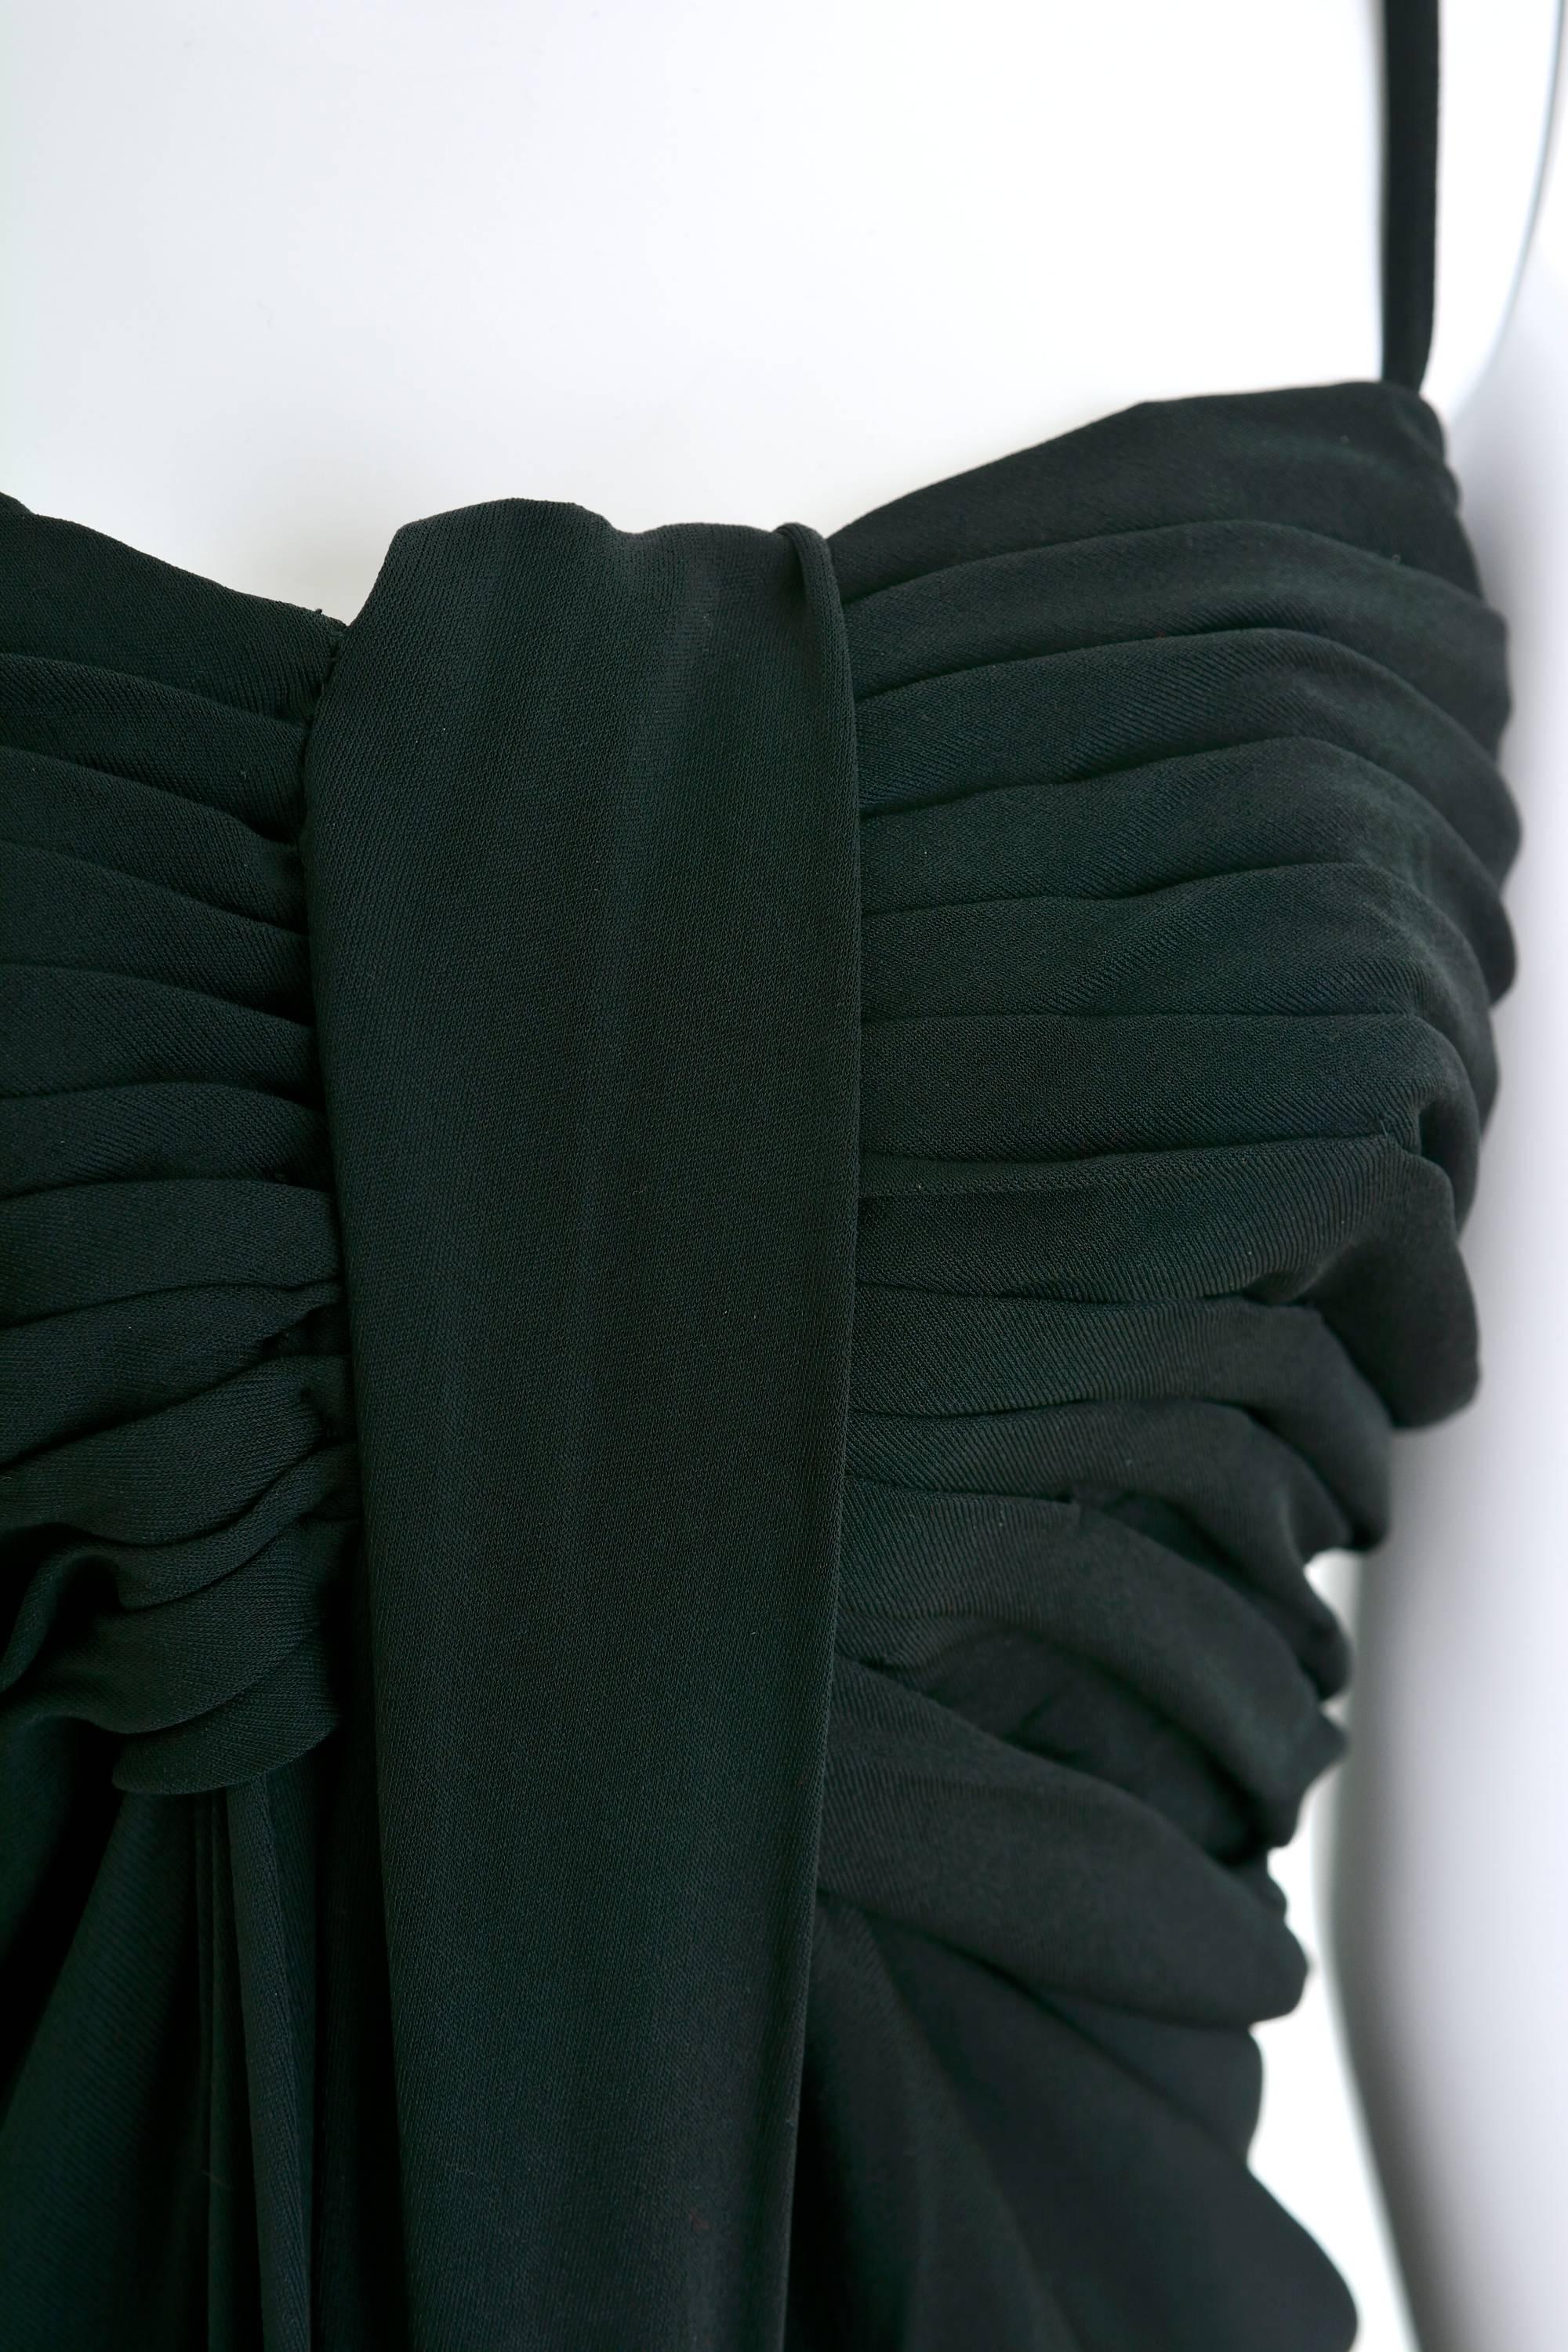 Women's 1970s SORELLE CHIOSTRI Couture Black Long Evening Dress For Sale